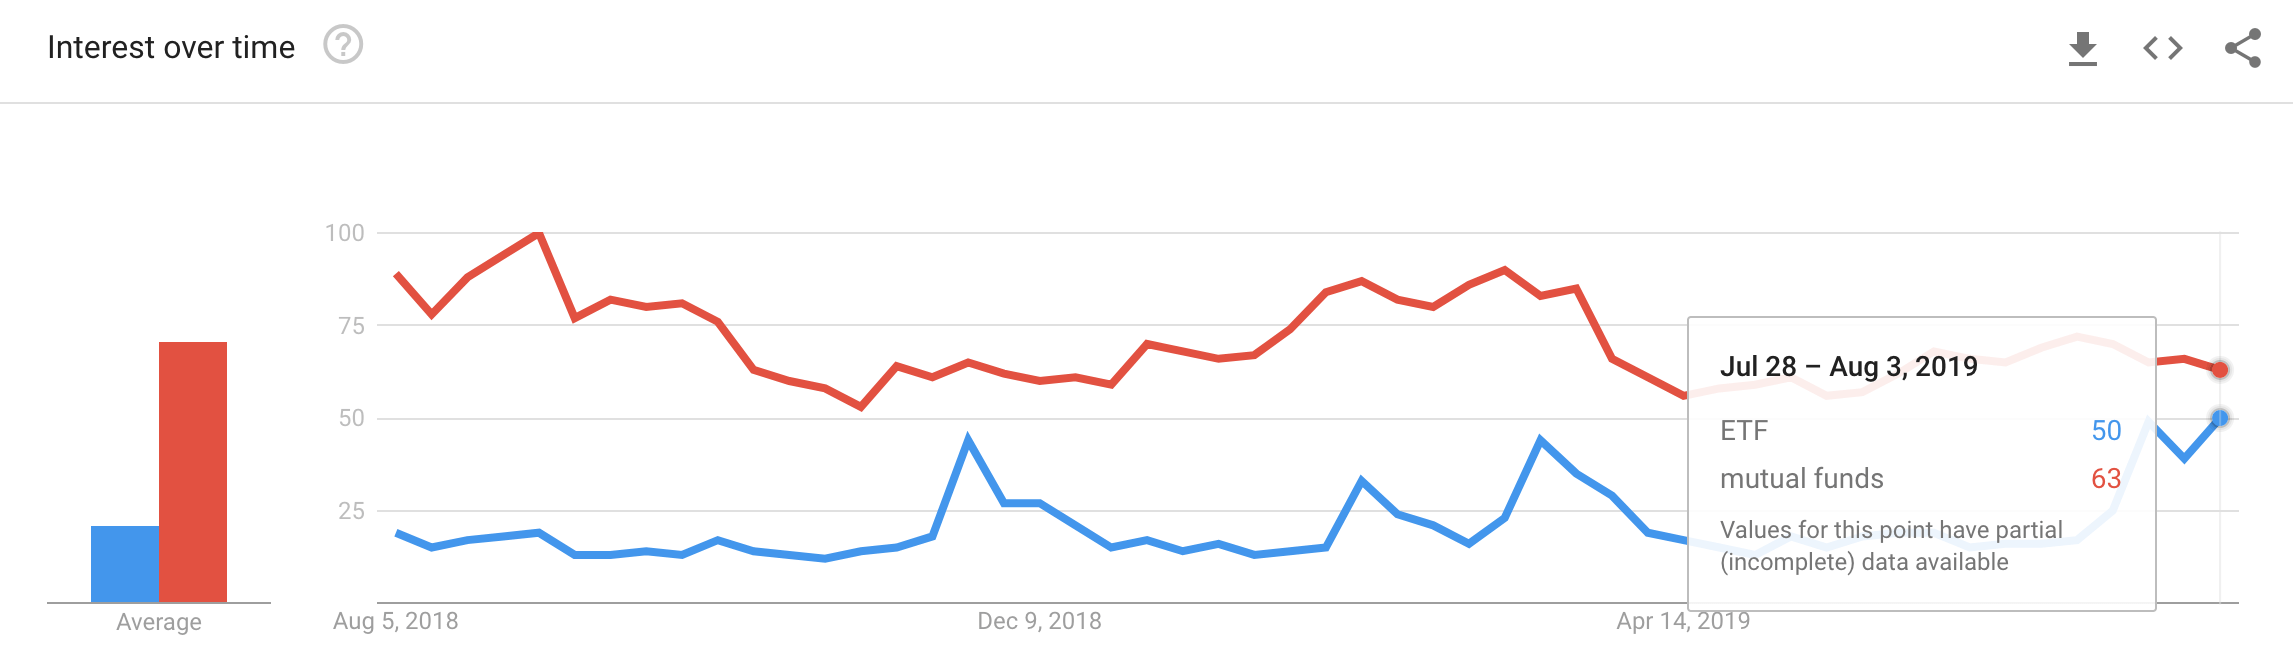 ETF Search Interest on Google